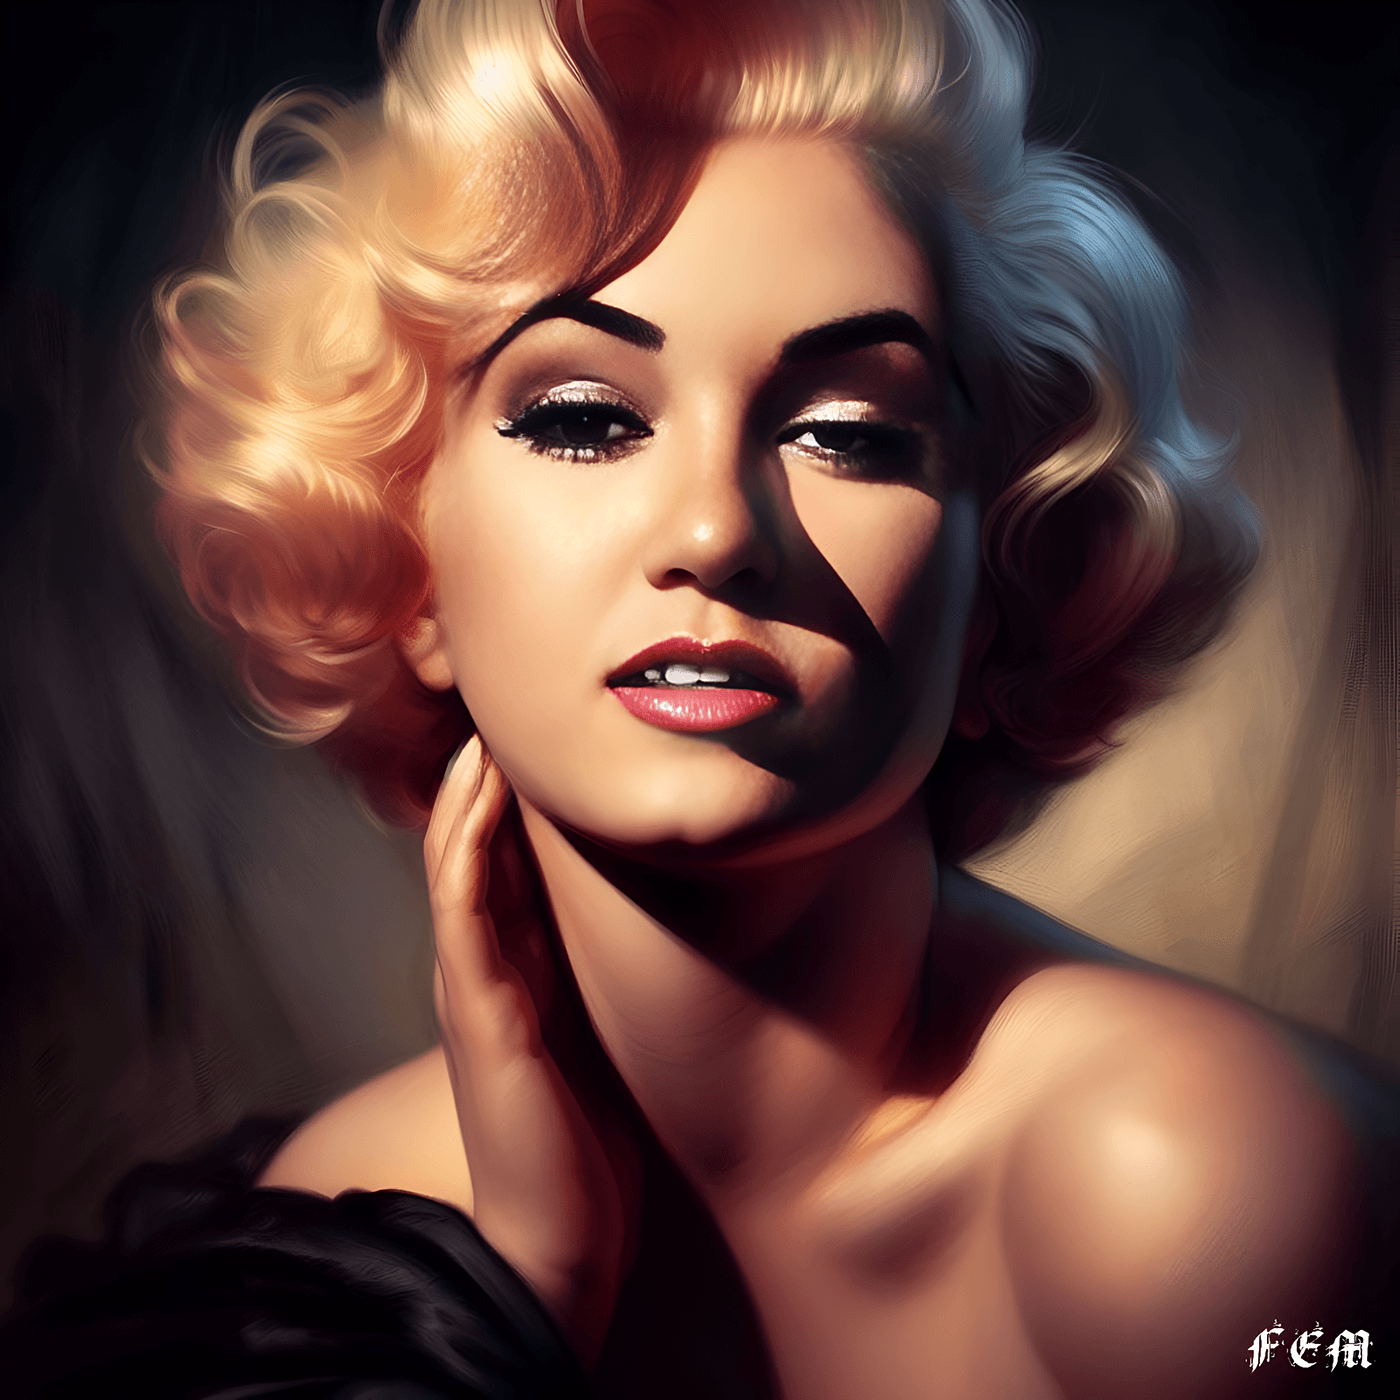 portraits beauty woman cleopatra Marilyn Monroe harley quinn fanart artwork Character design  concept art